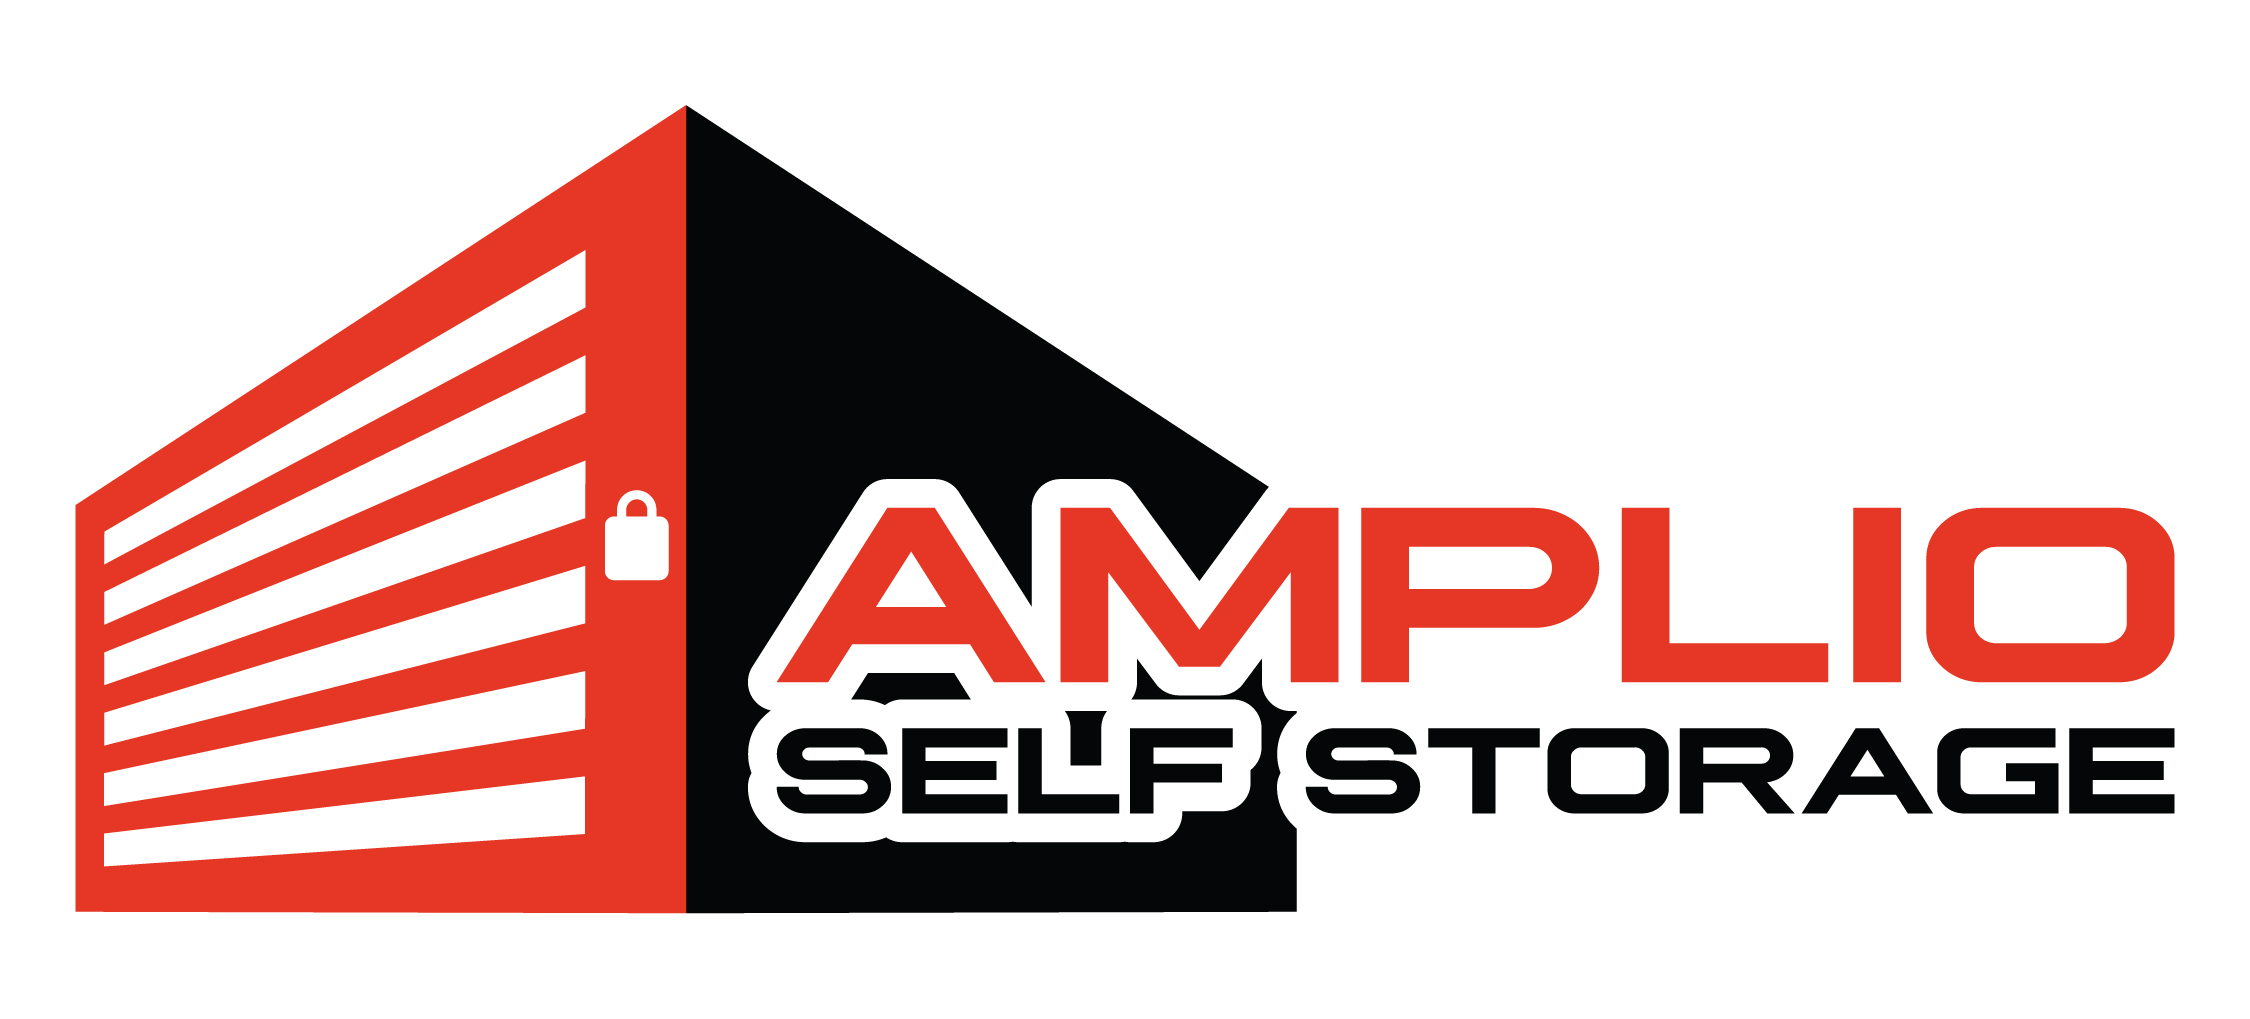 Amplio Self Storage Logo